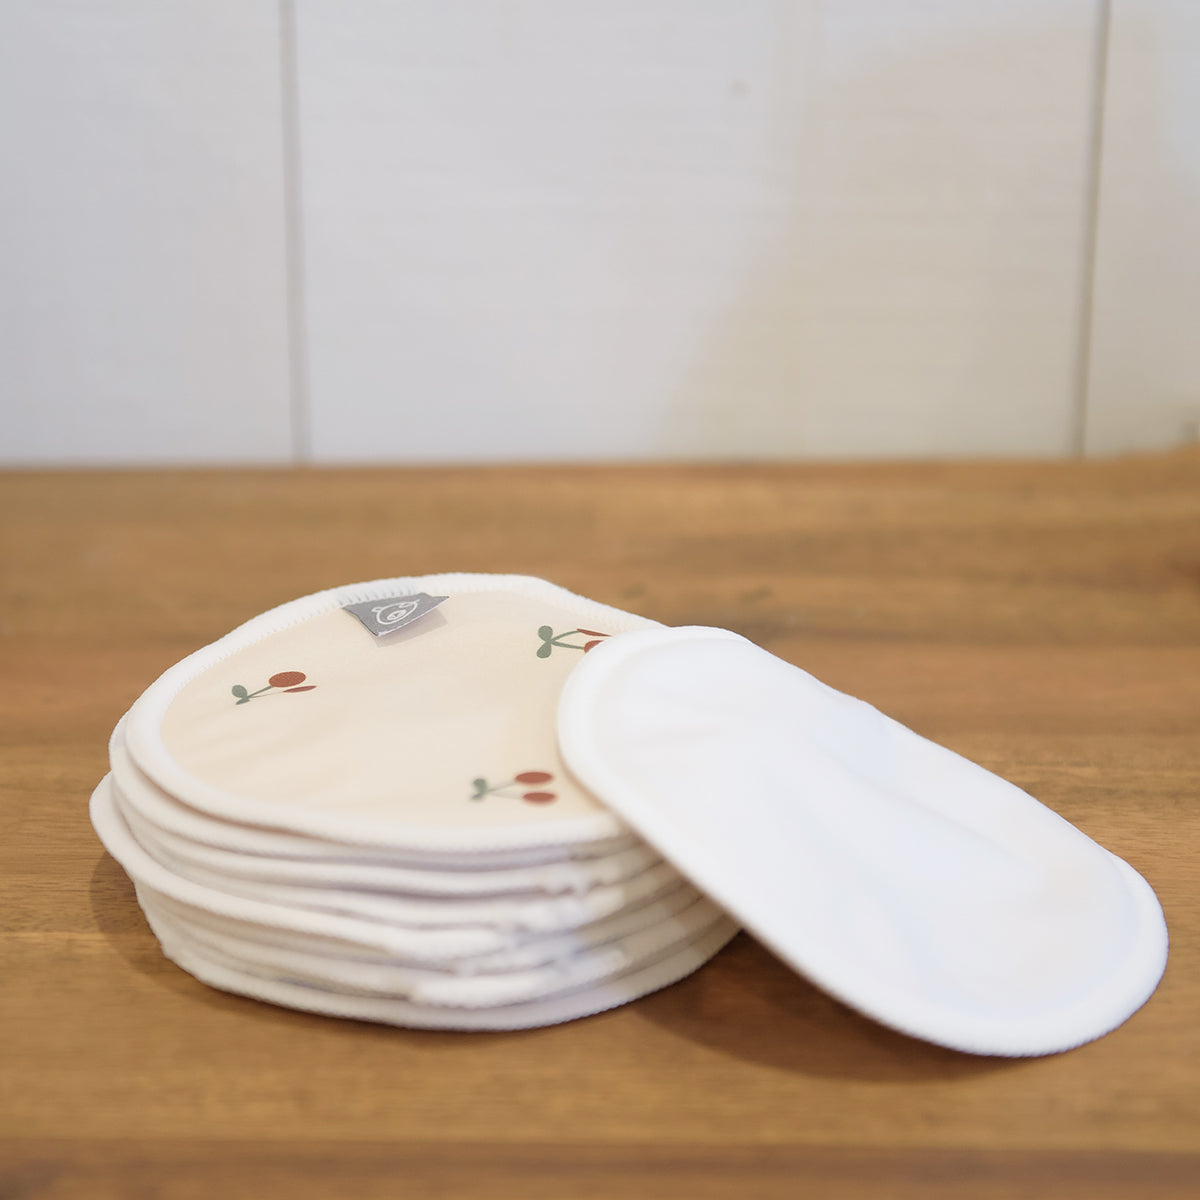 MilkDaze Reusable Washable Stay-Dry Nursing Pads – Cotton Babies